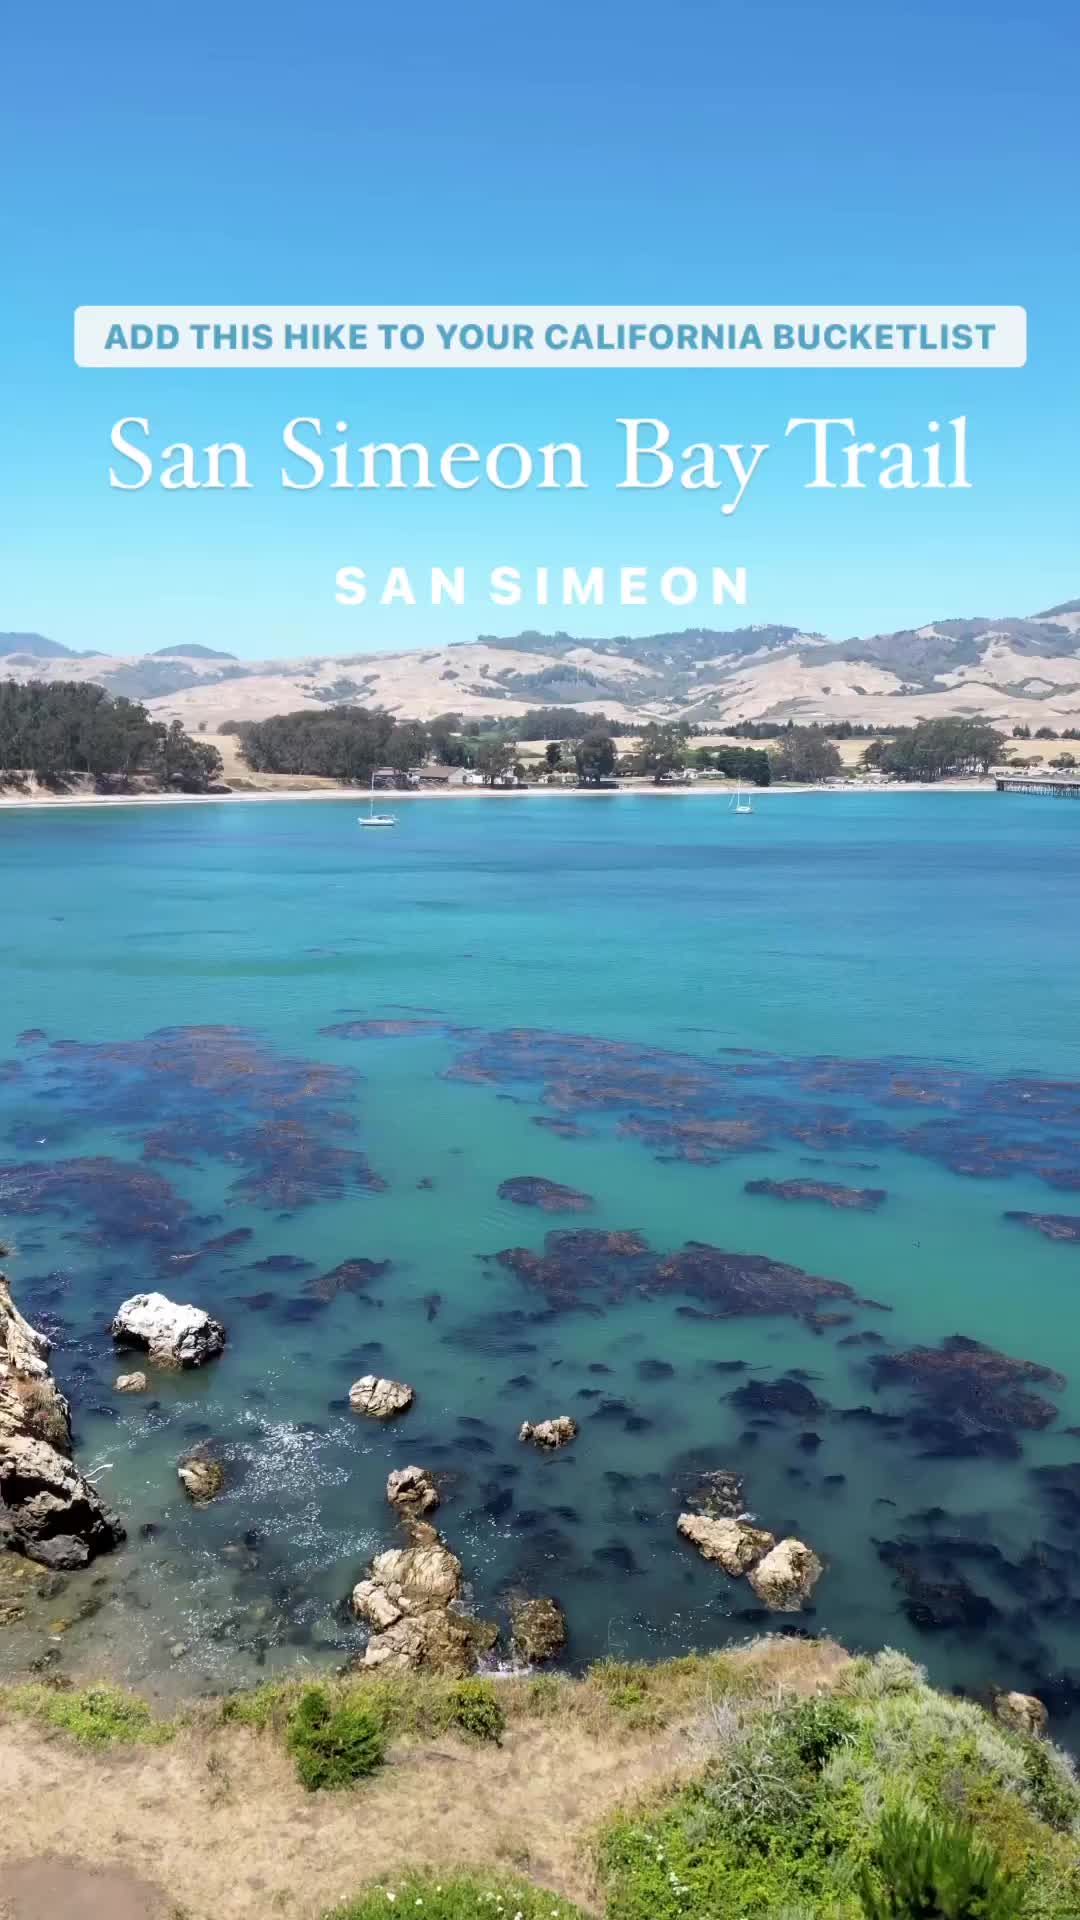 Scenic San Simeon Bay Trail: A Must-Do California Hike